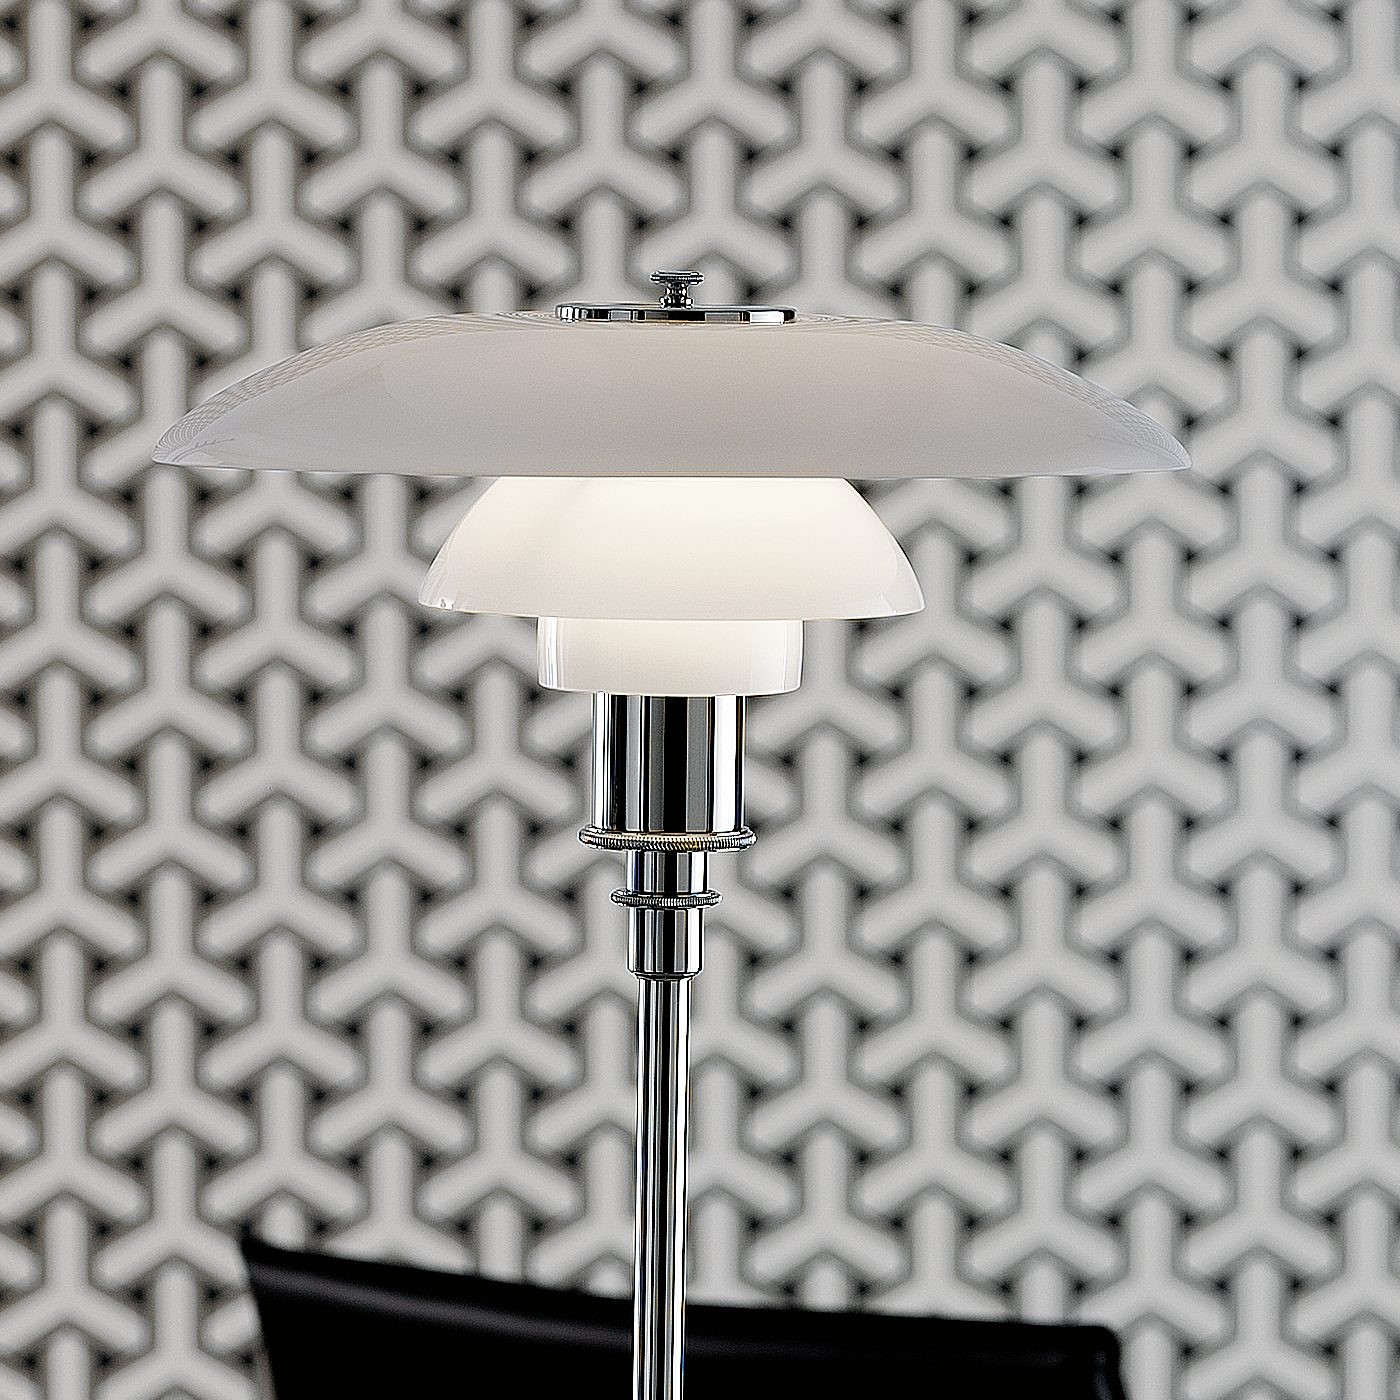 Louis Poulsen PH 3½-2 ½ Floor Lamp in Black